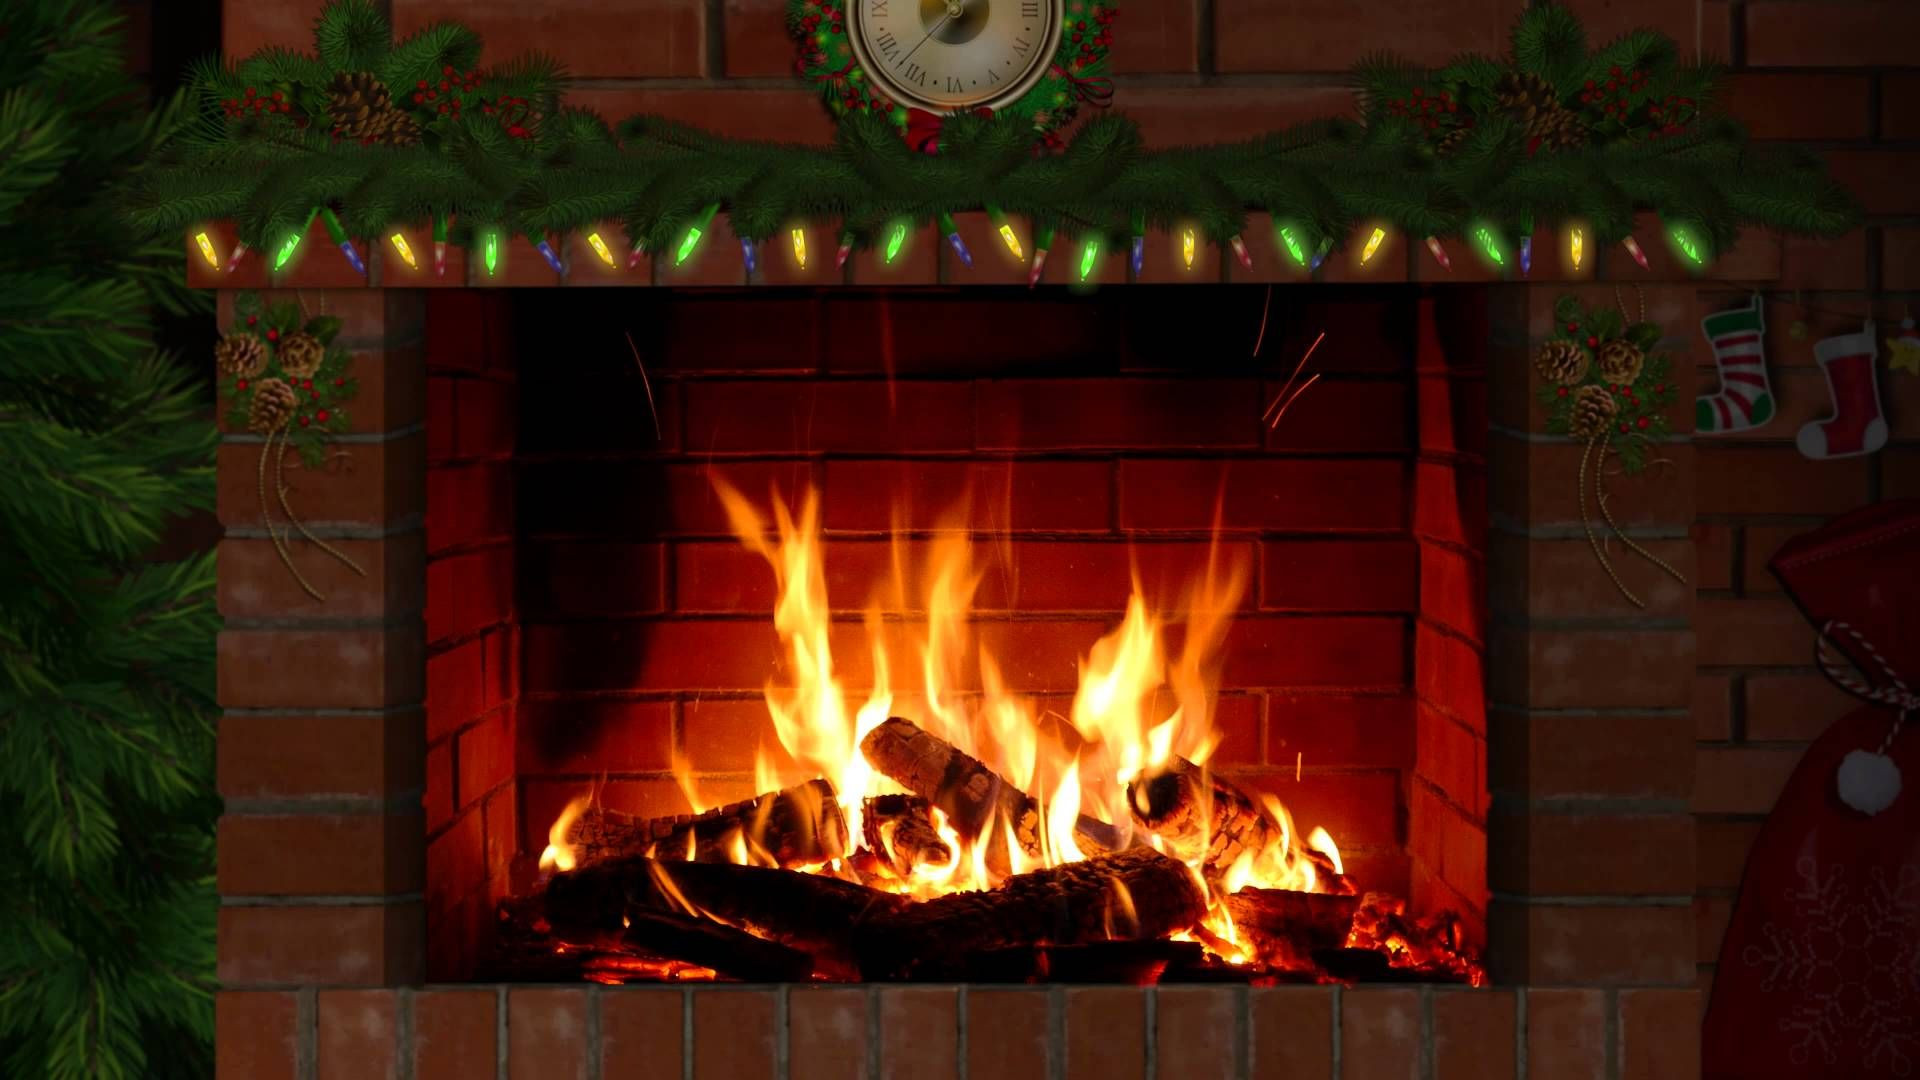 Christmas Music Fireplace
 Fireplace with Christmas music 3 hours Enjoy Christmas